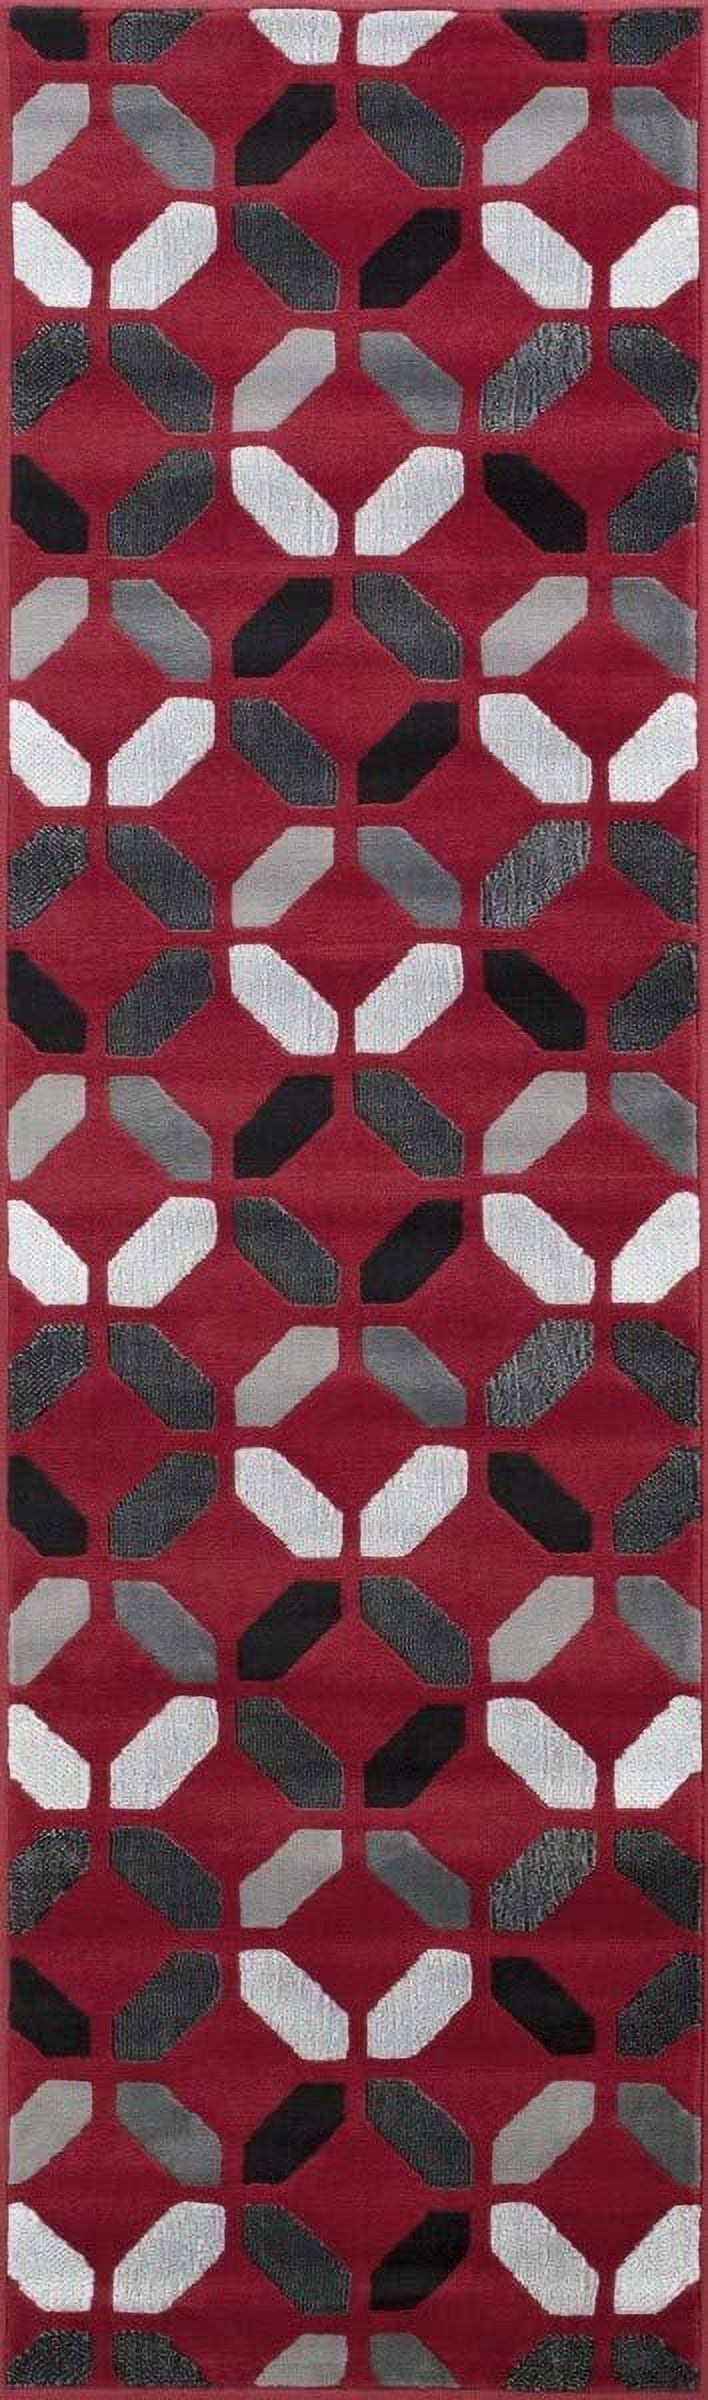 Modern Contemporary Livingroom Red Grey Silver Black Dimond Pattern Area Rug Geometric Design - image 2 of 12